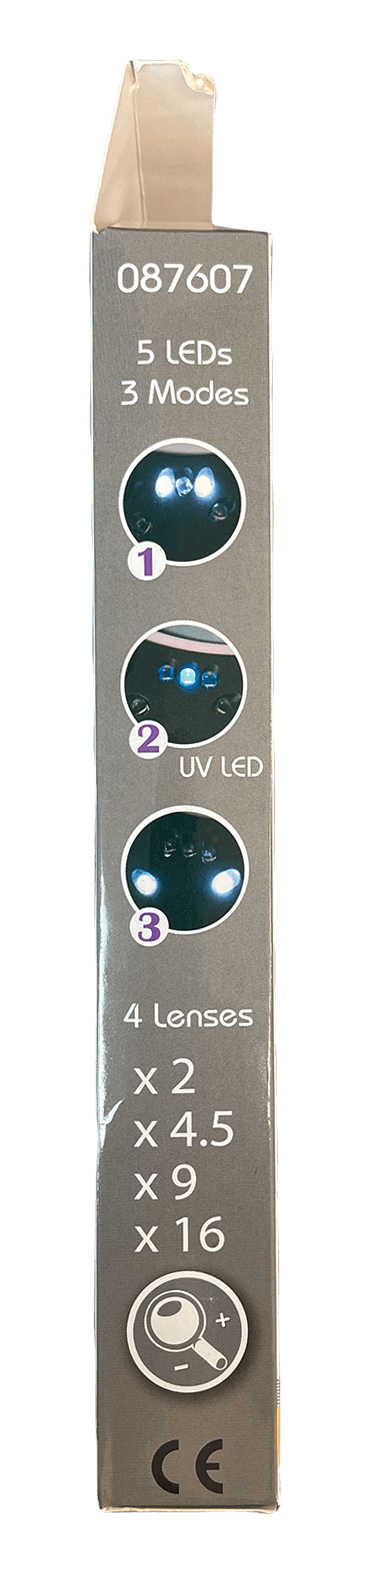 Premium LED-Lupe 4-faches Linsensystem Handlupe Lesehilfe